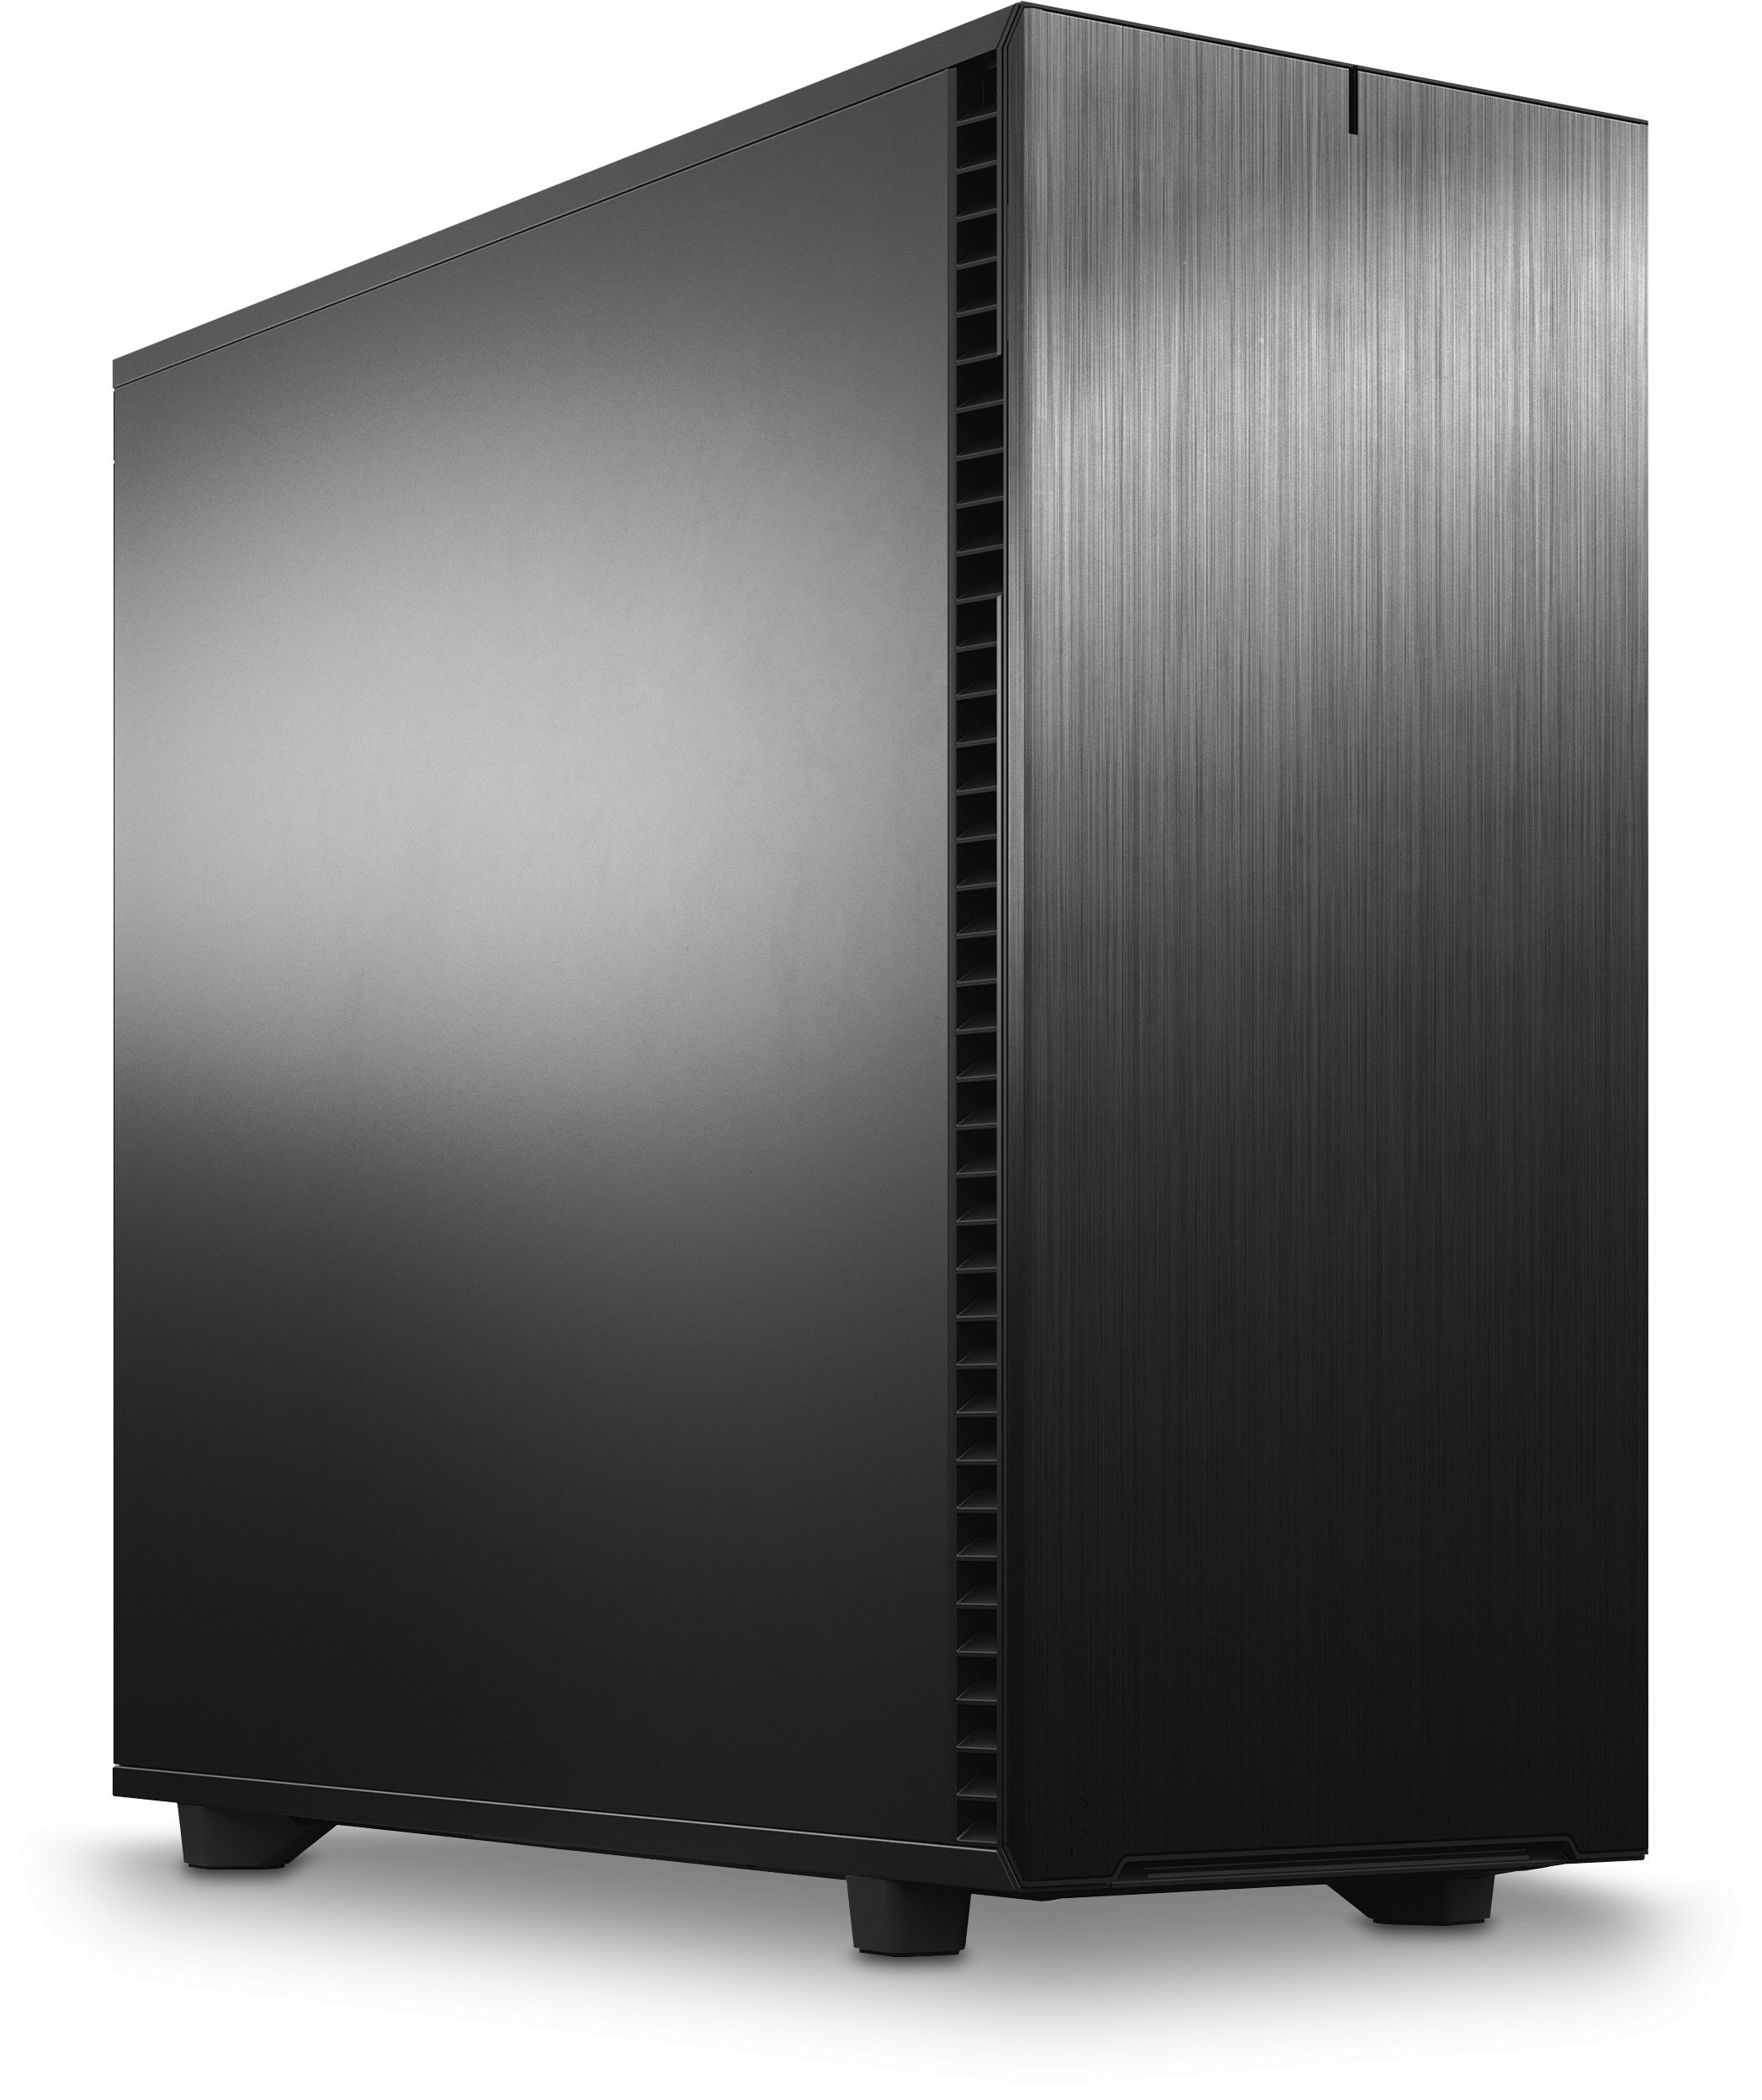 Define 7 XL Black Full Tower PC Case